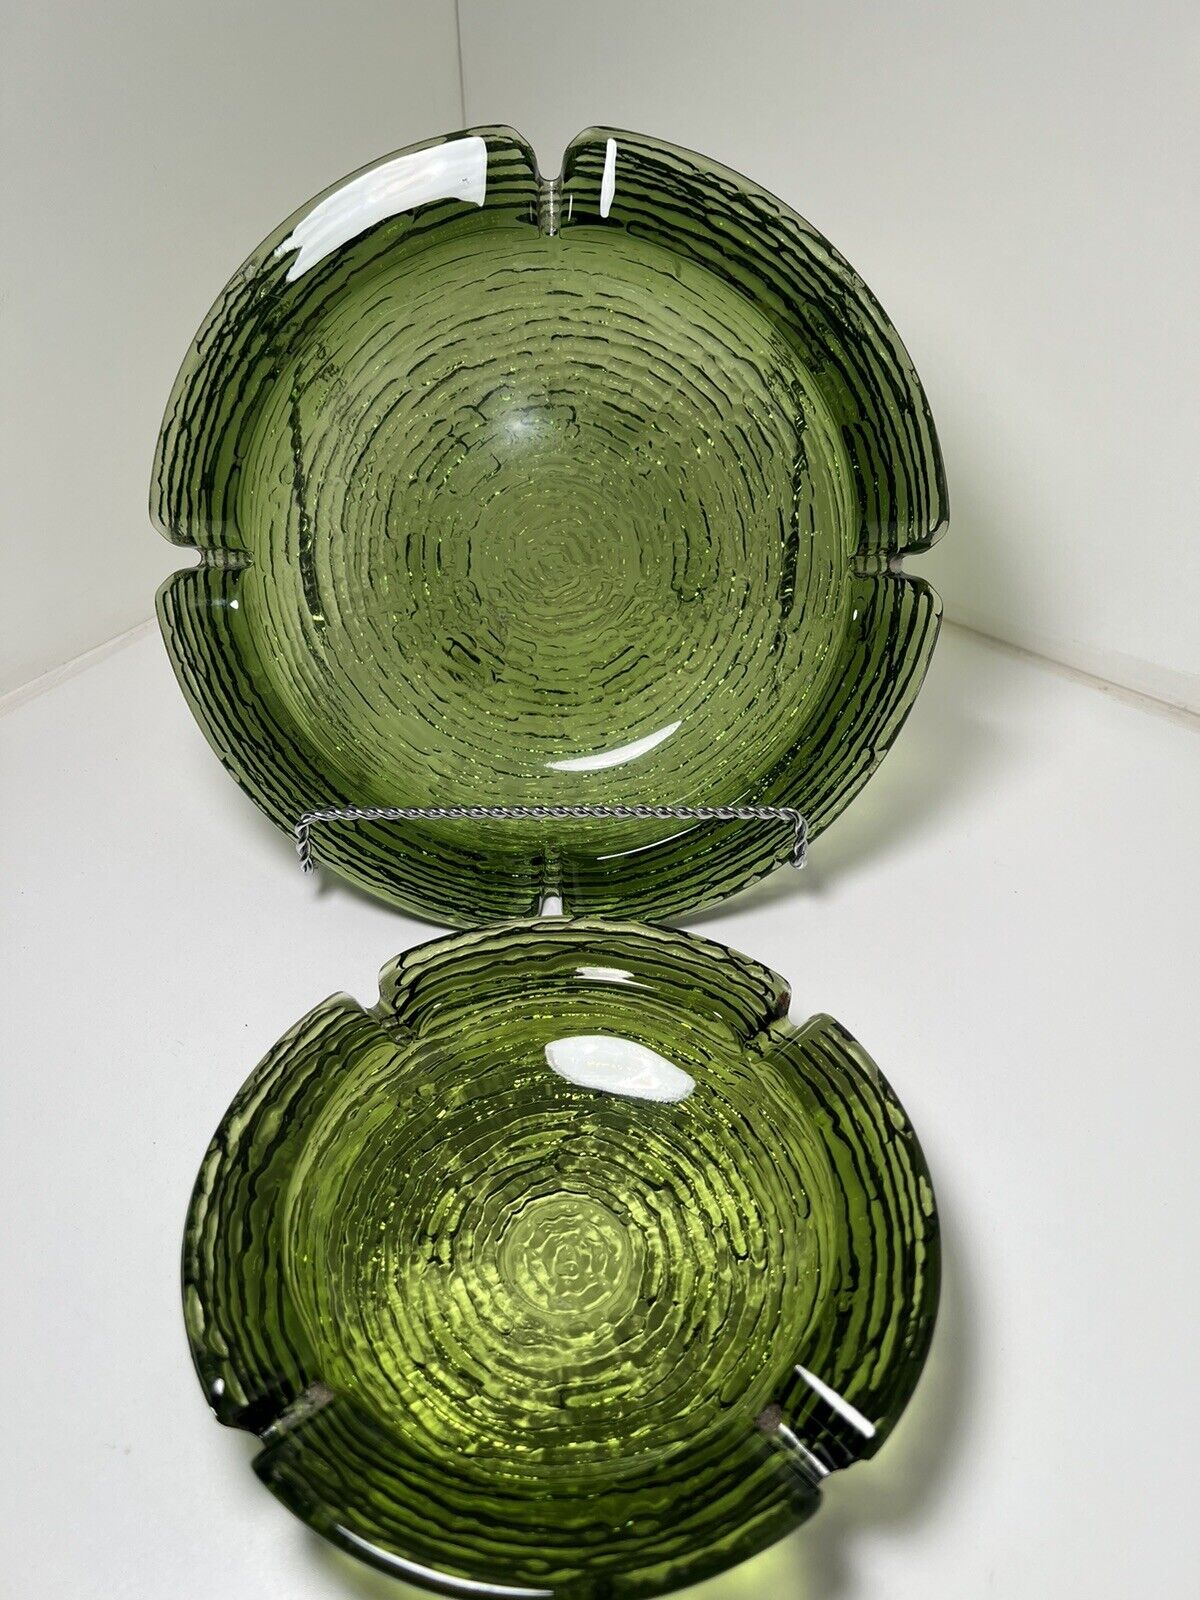 MCM Anchor Hocking Soreno glass green bark texture ashtrays (set of 2).